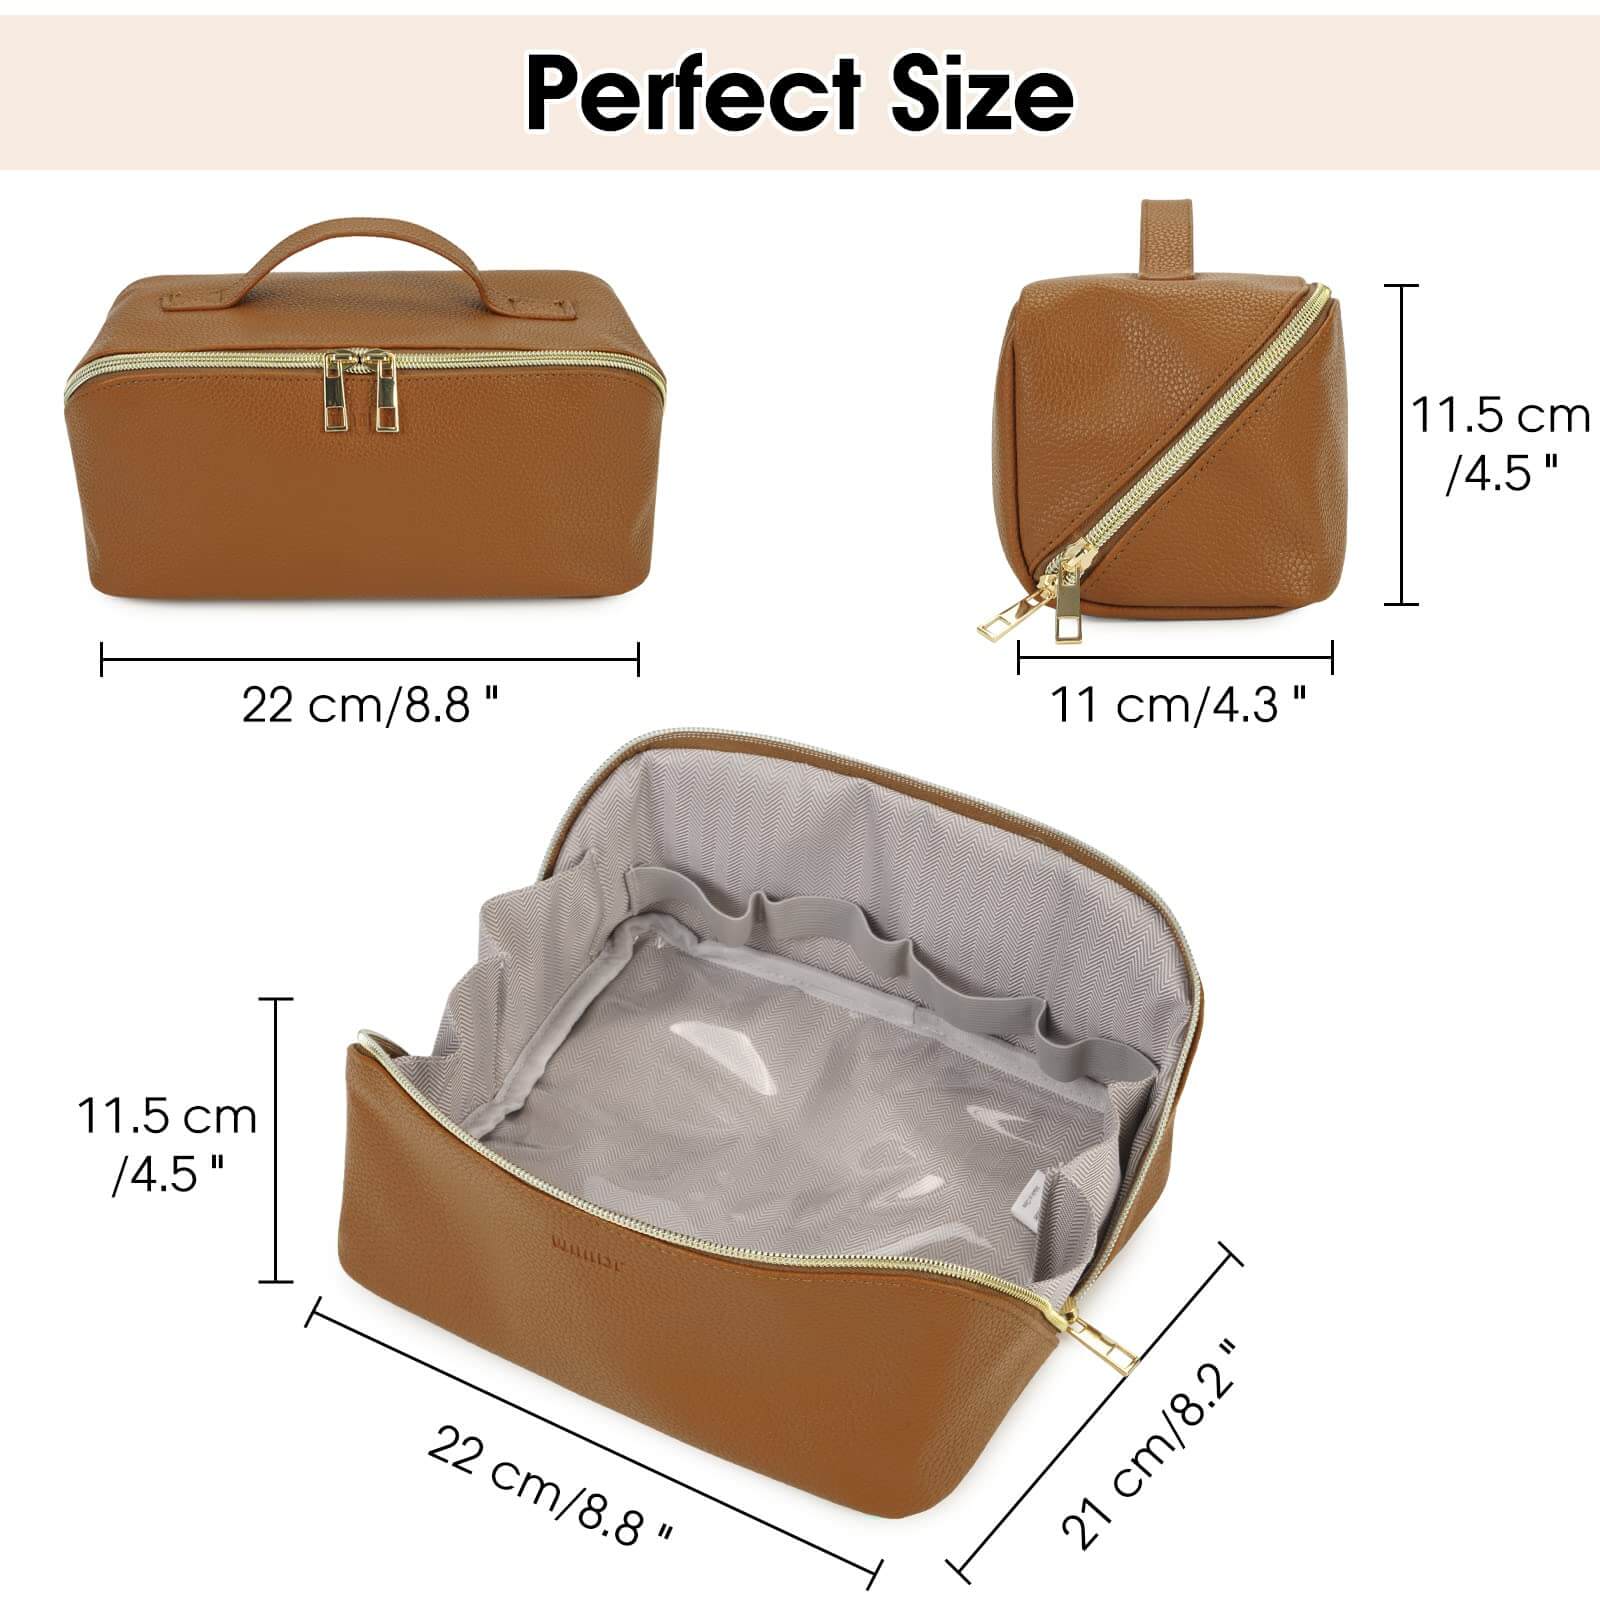 Large Capacity Travel Cosmetic Bag, Travel Makeup Bag, Opens Flat